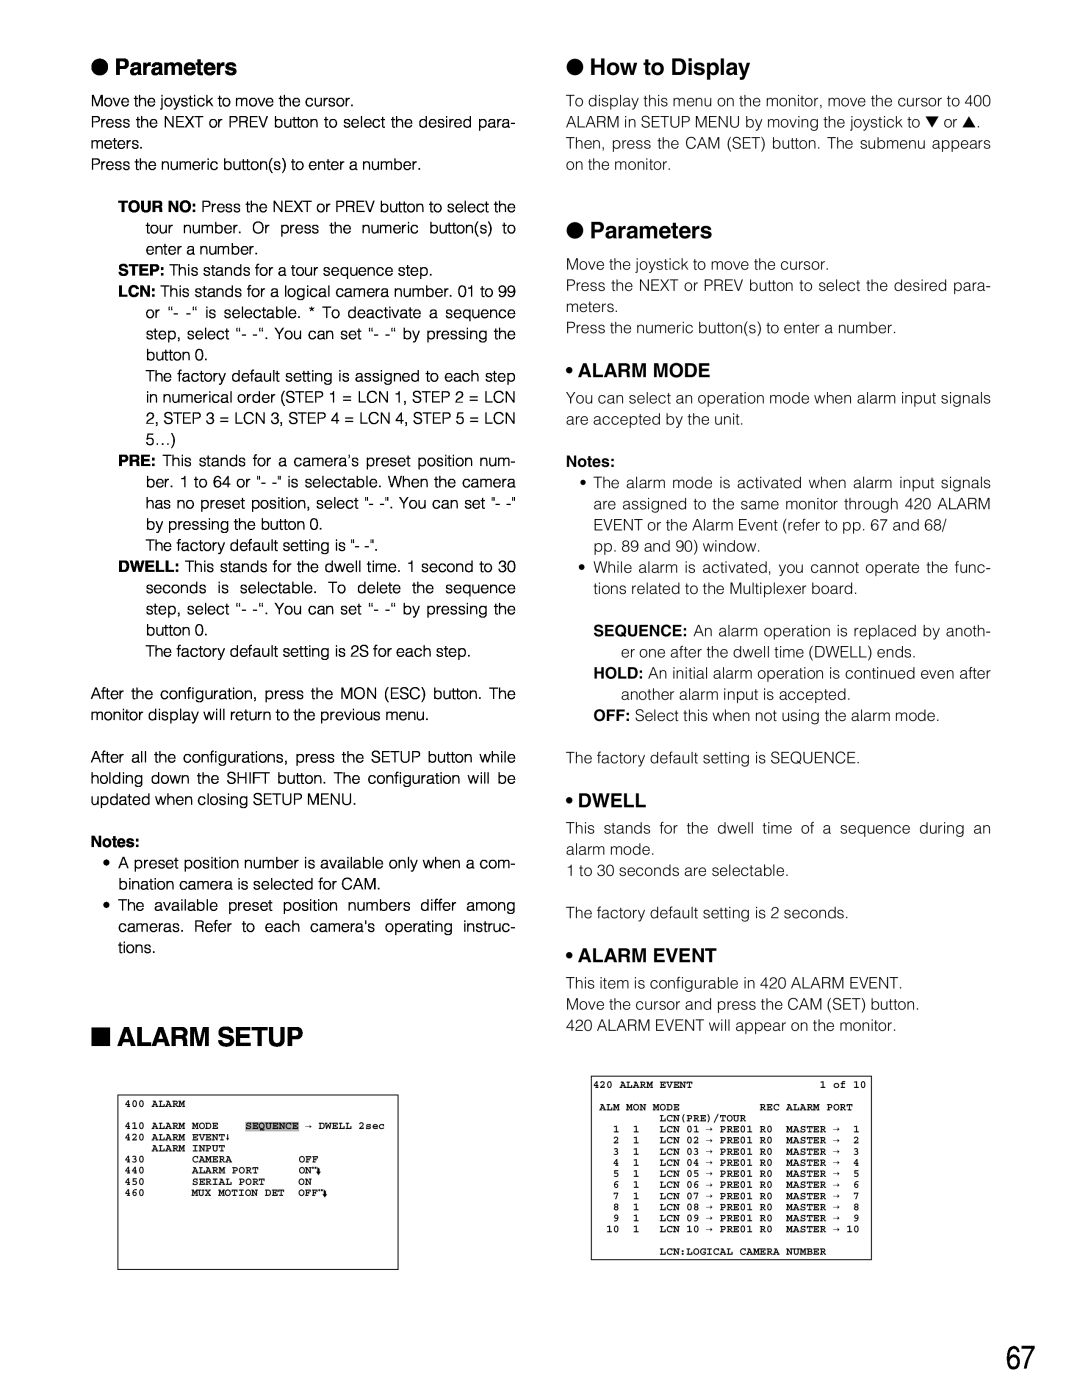 Panasonic WJ-SX150A manual Alarm Setup, Alarm Mode, Dwell, Alarm Event, Parameters, How to Display 